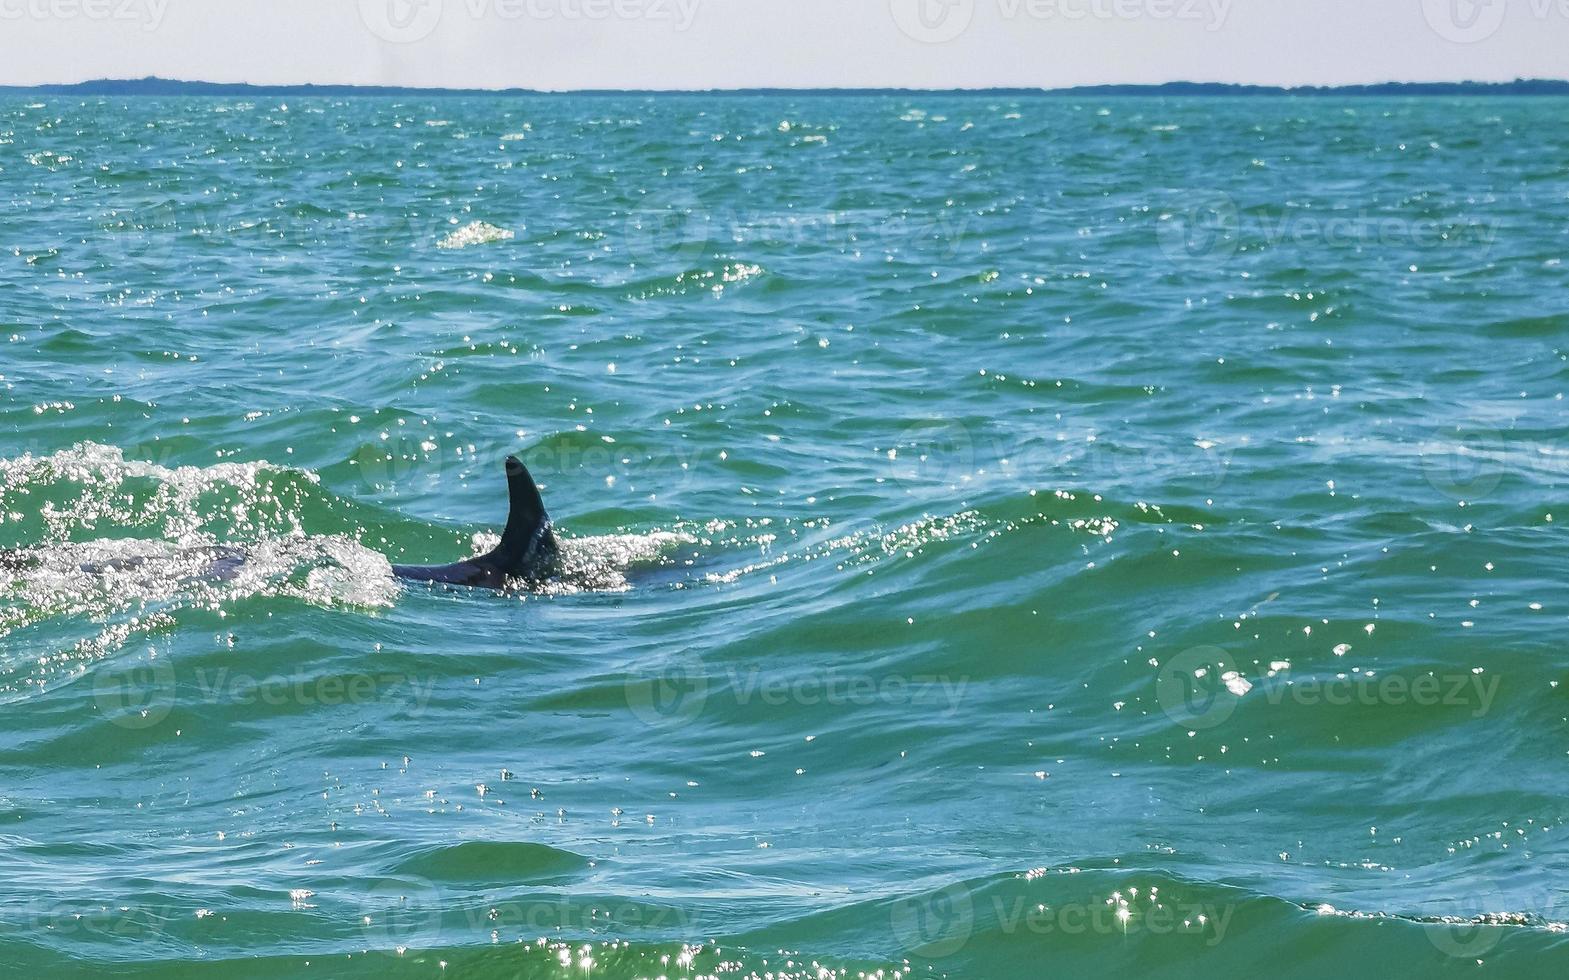 dolfijnen zwemmen in de water uit holbox eiland Mexico. foto